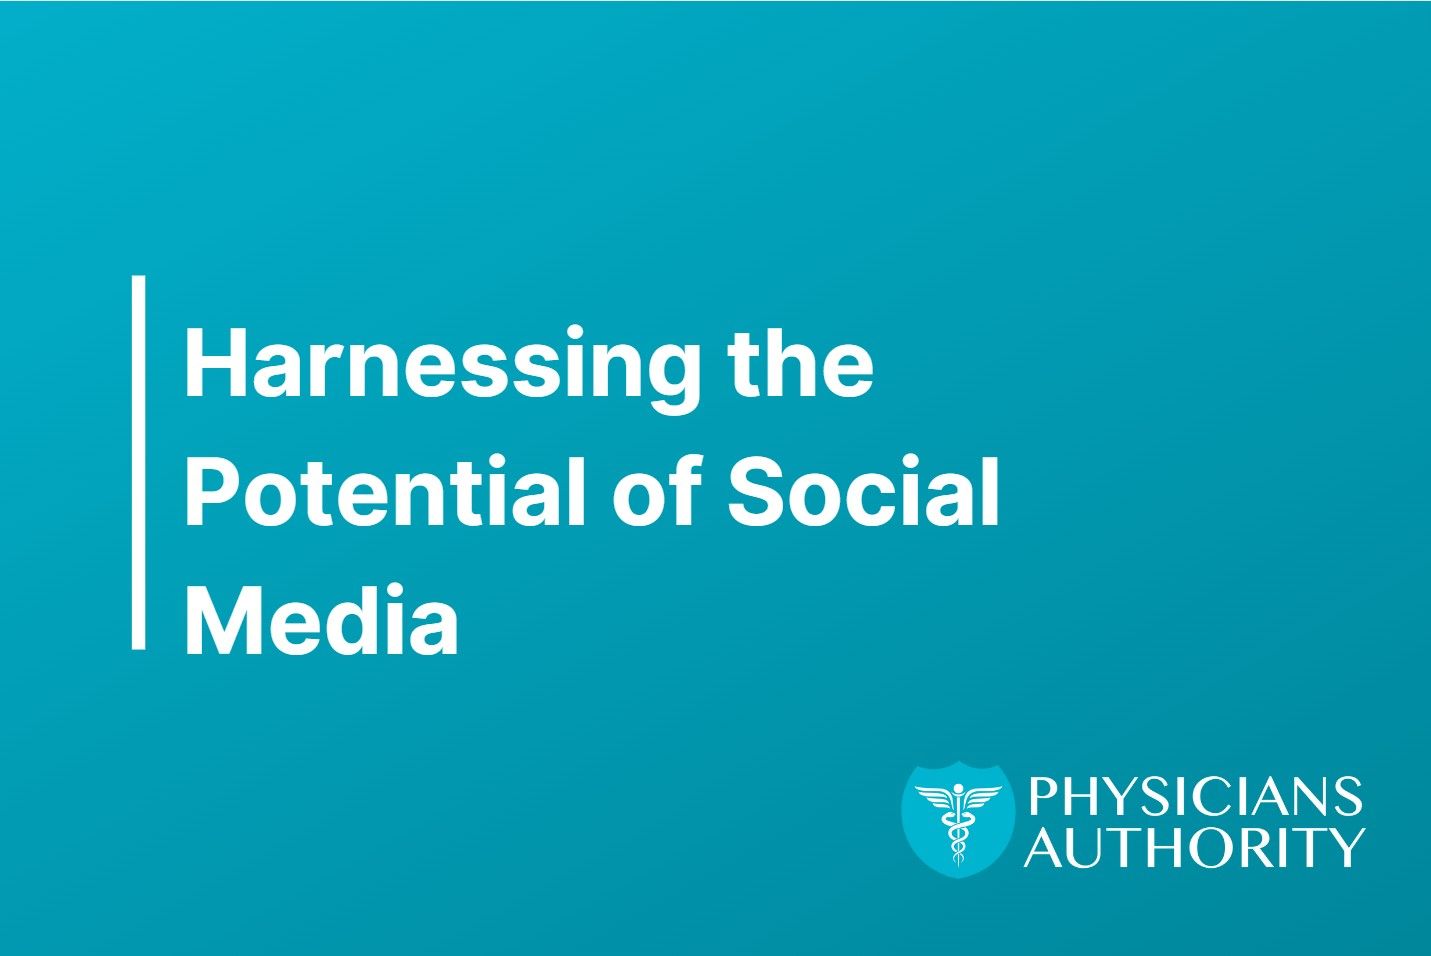 social media marketing for doctors